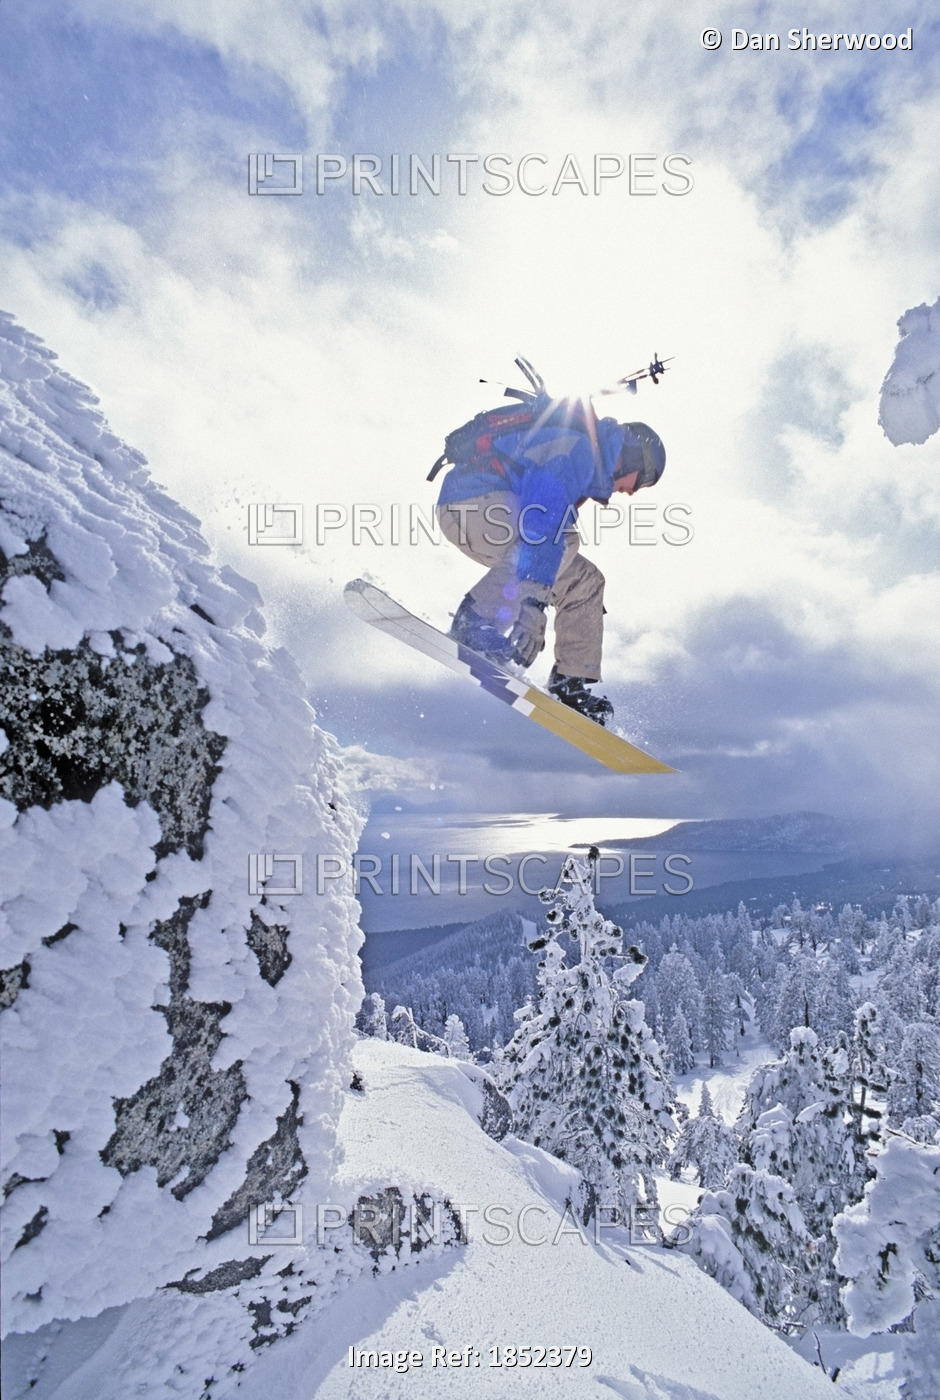 Diamond Peak, Lake Tahoe, Nevada, Usa; Man Snowboarding In Mid-Air